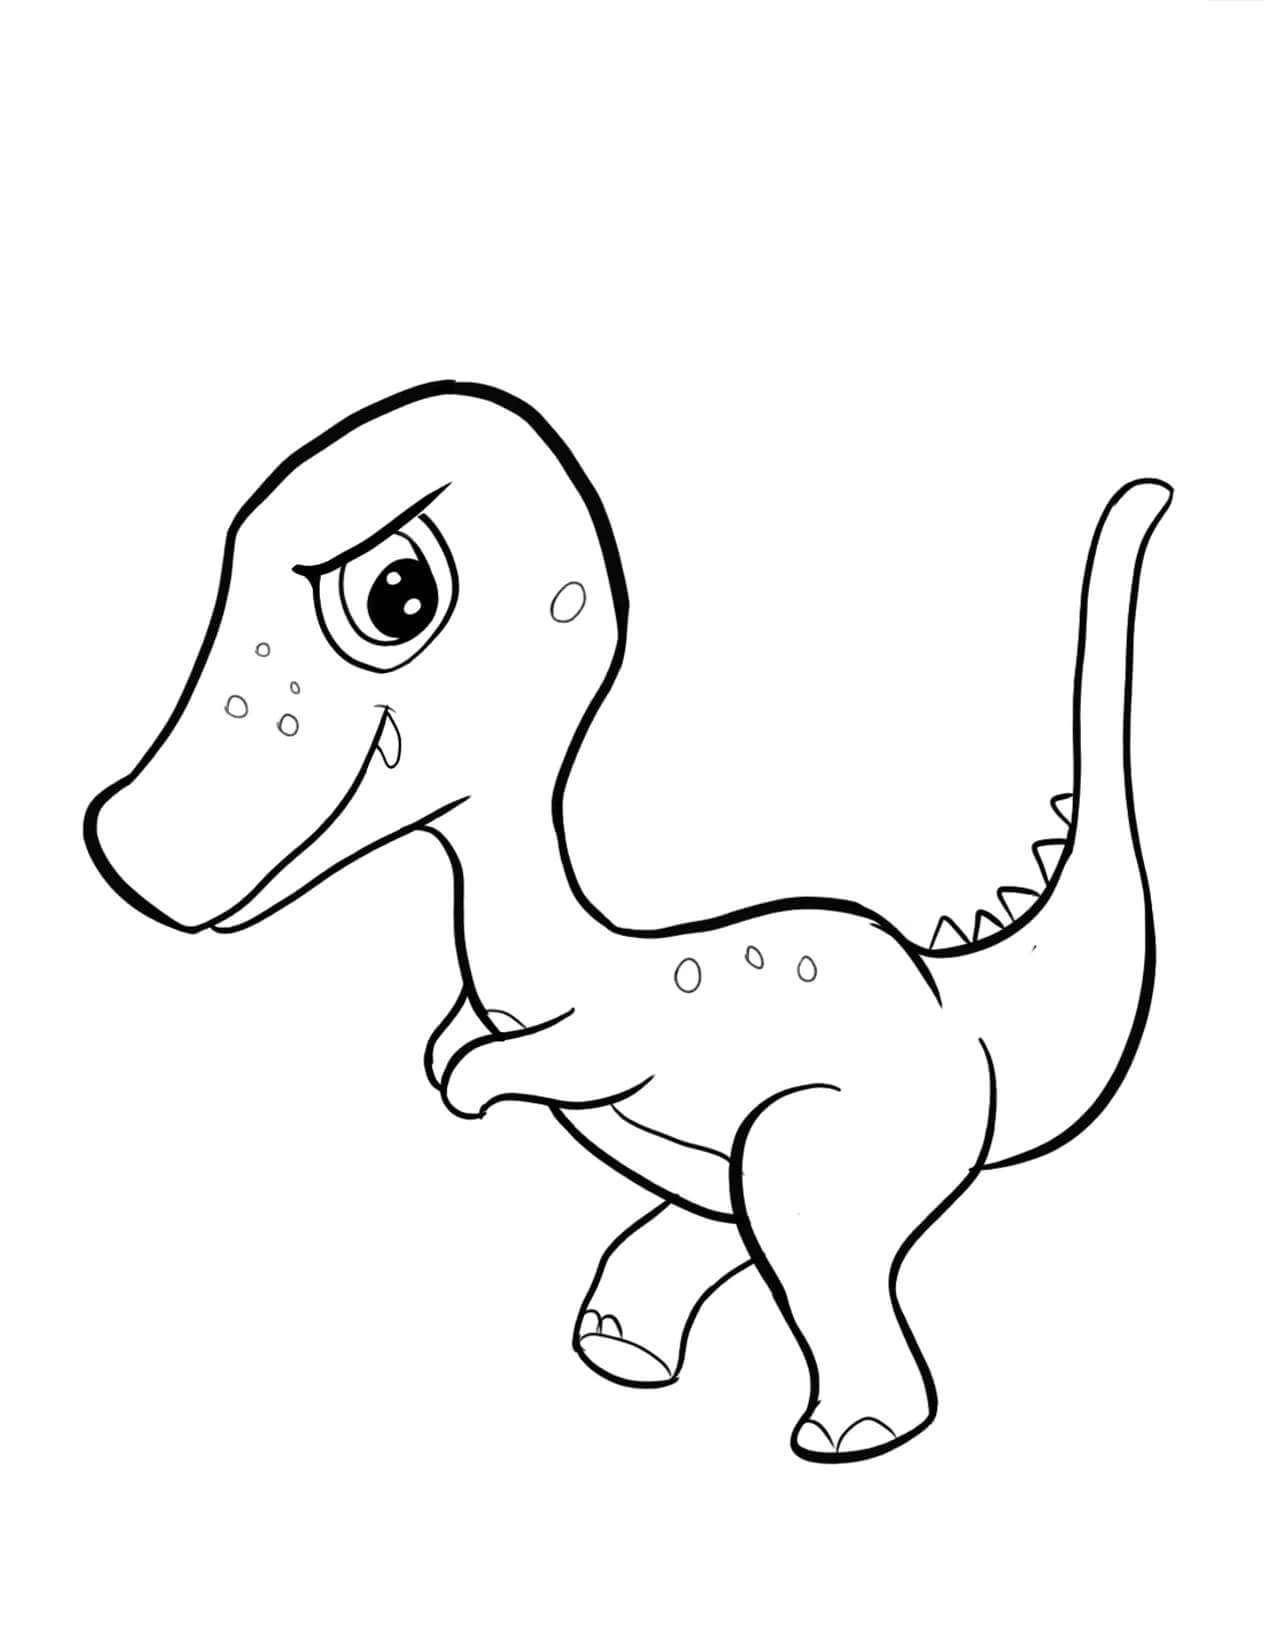 Sweet Dinosaur coloring page